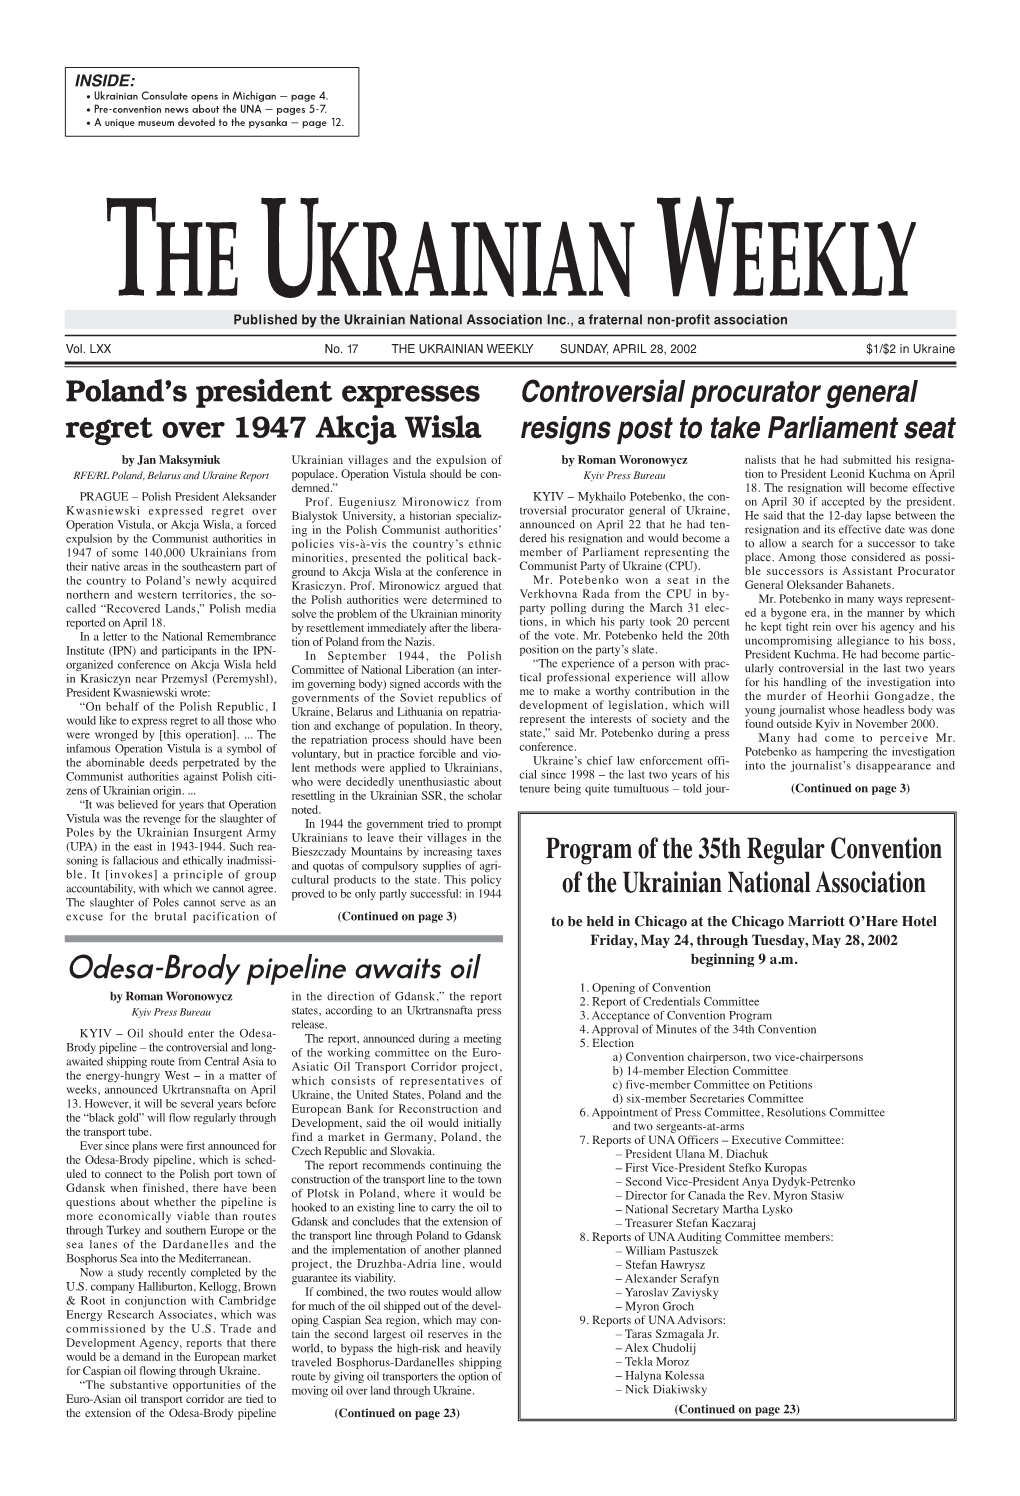 The Ukrainian Weekly 2002, No.17